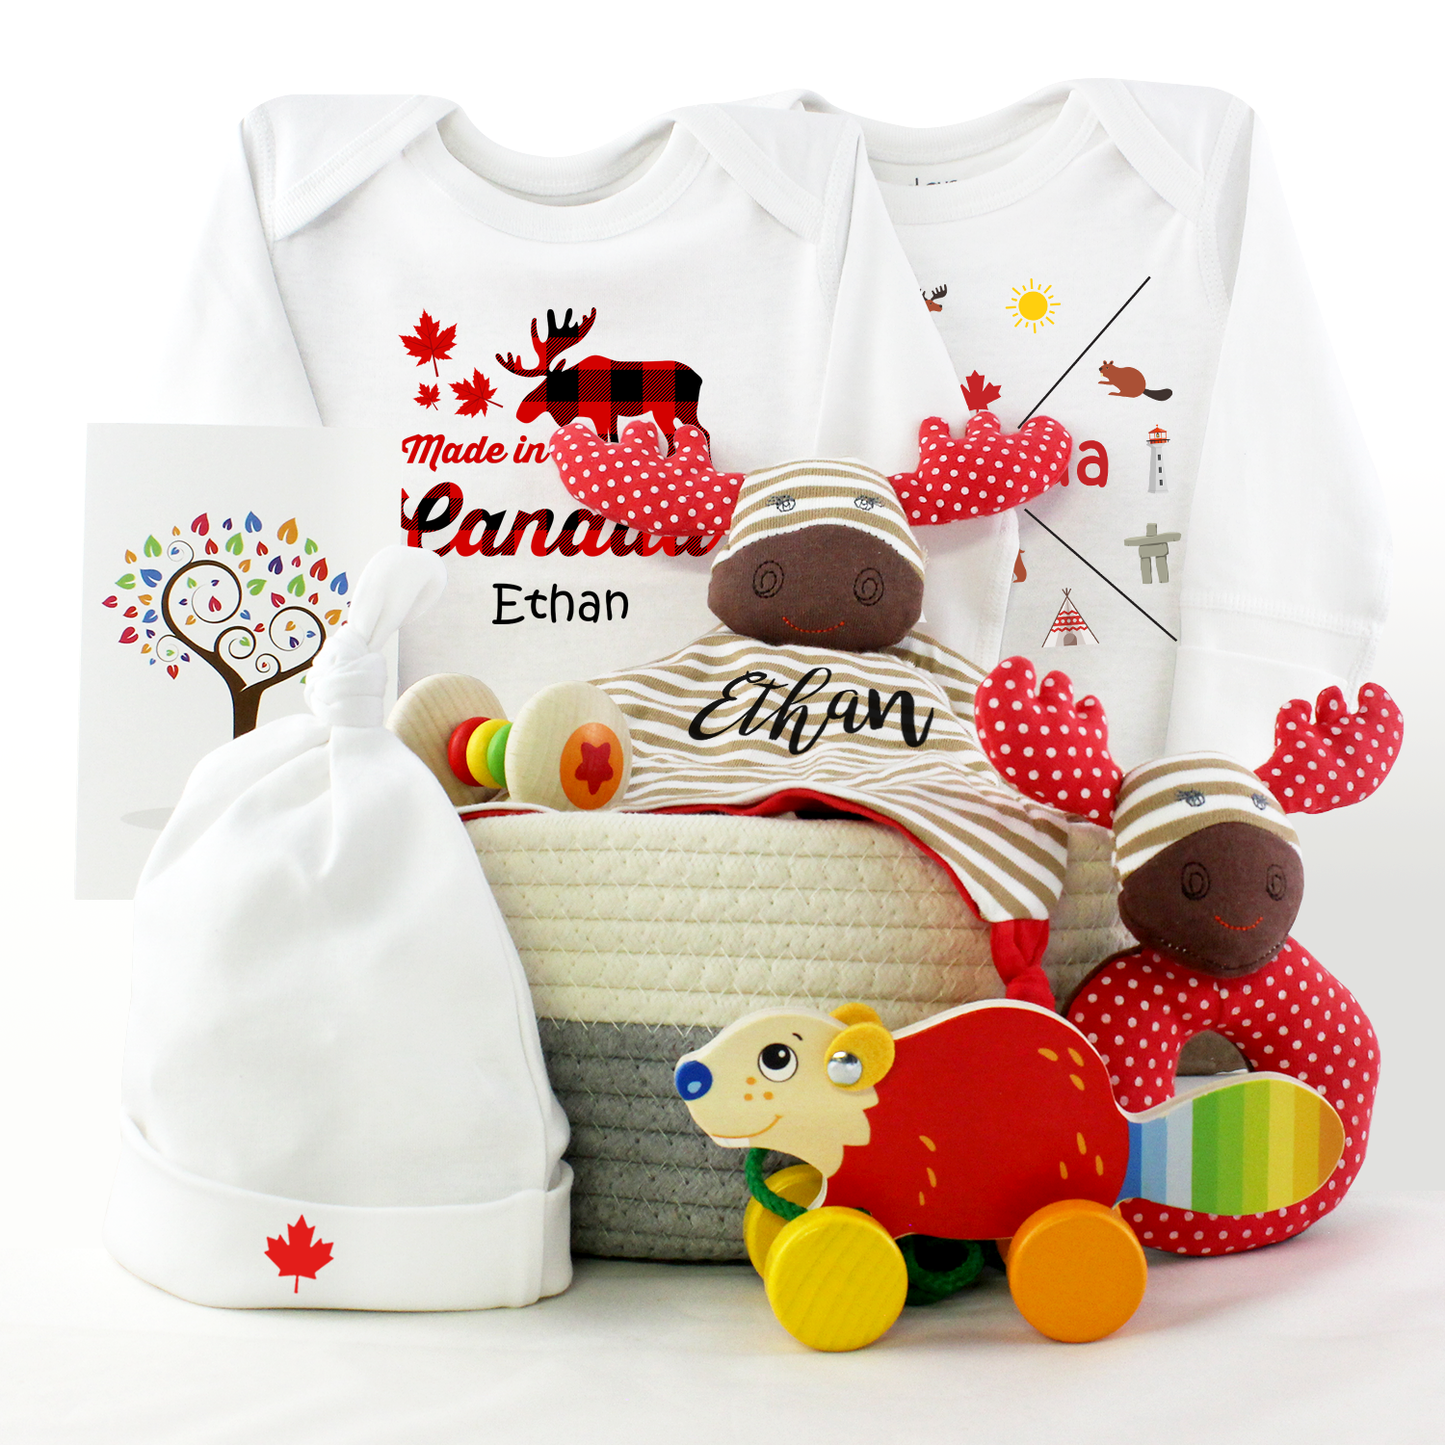 A little gift basket for baby sis! #gift #giftideas #giftbasket #aloyo